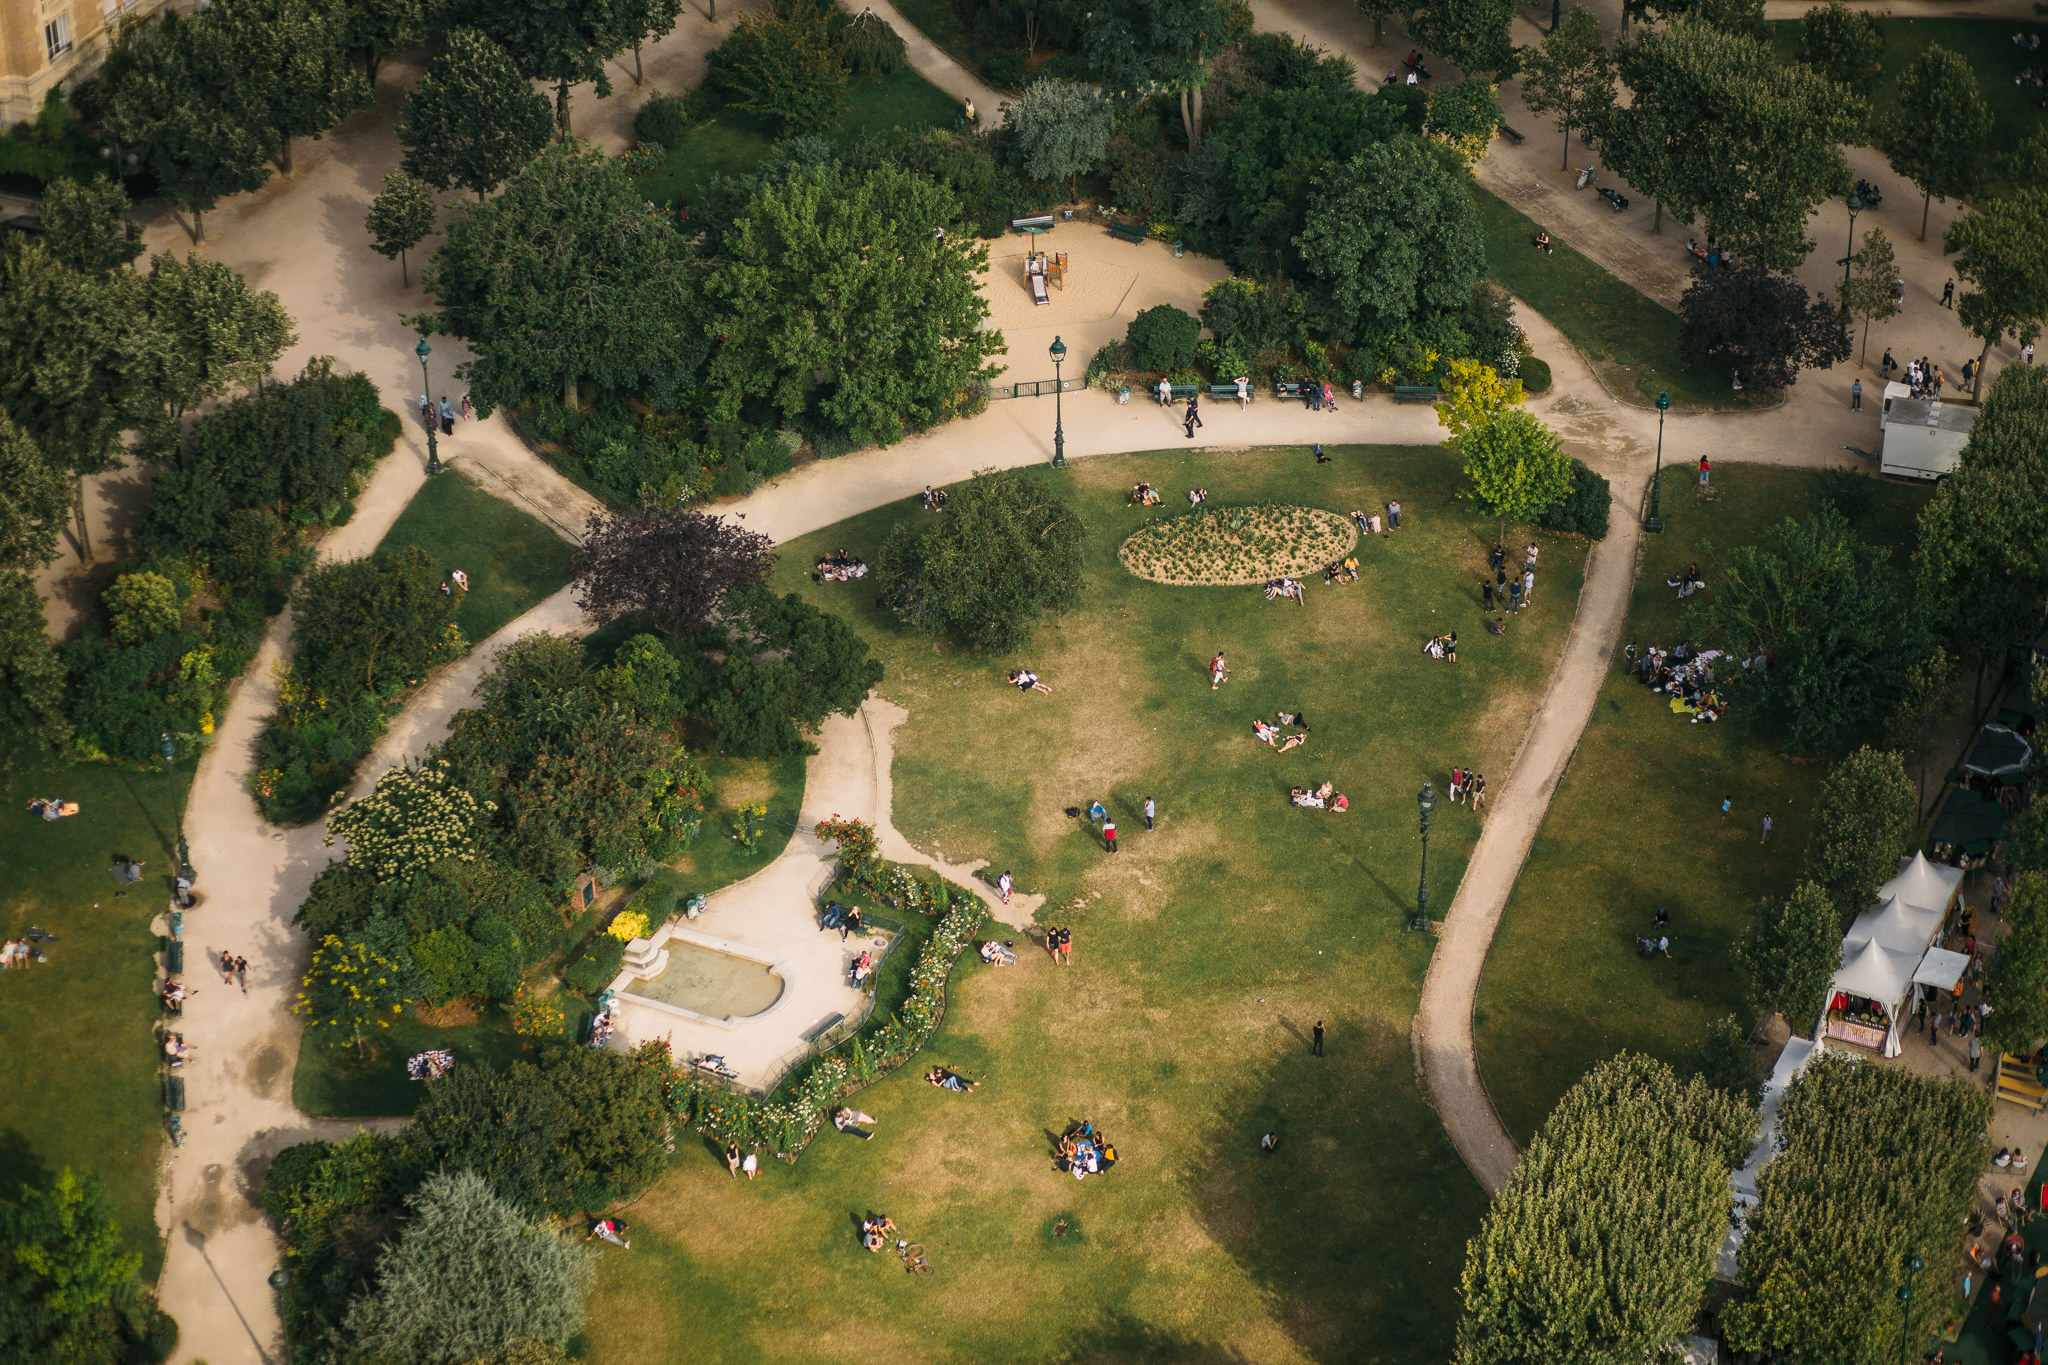 birds eye view of park in paris